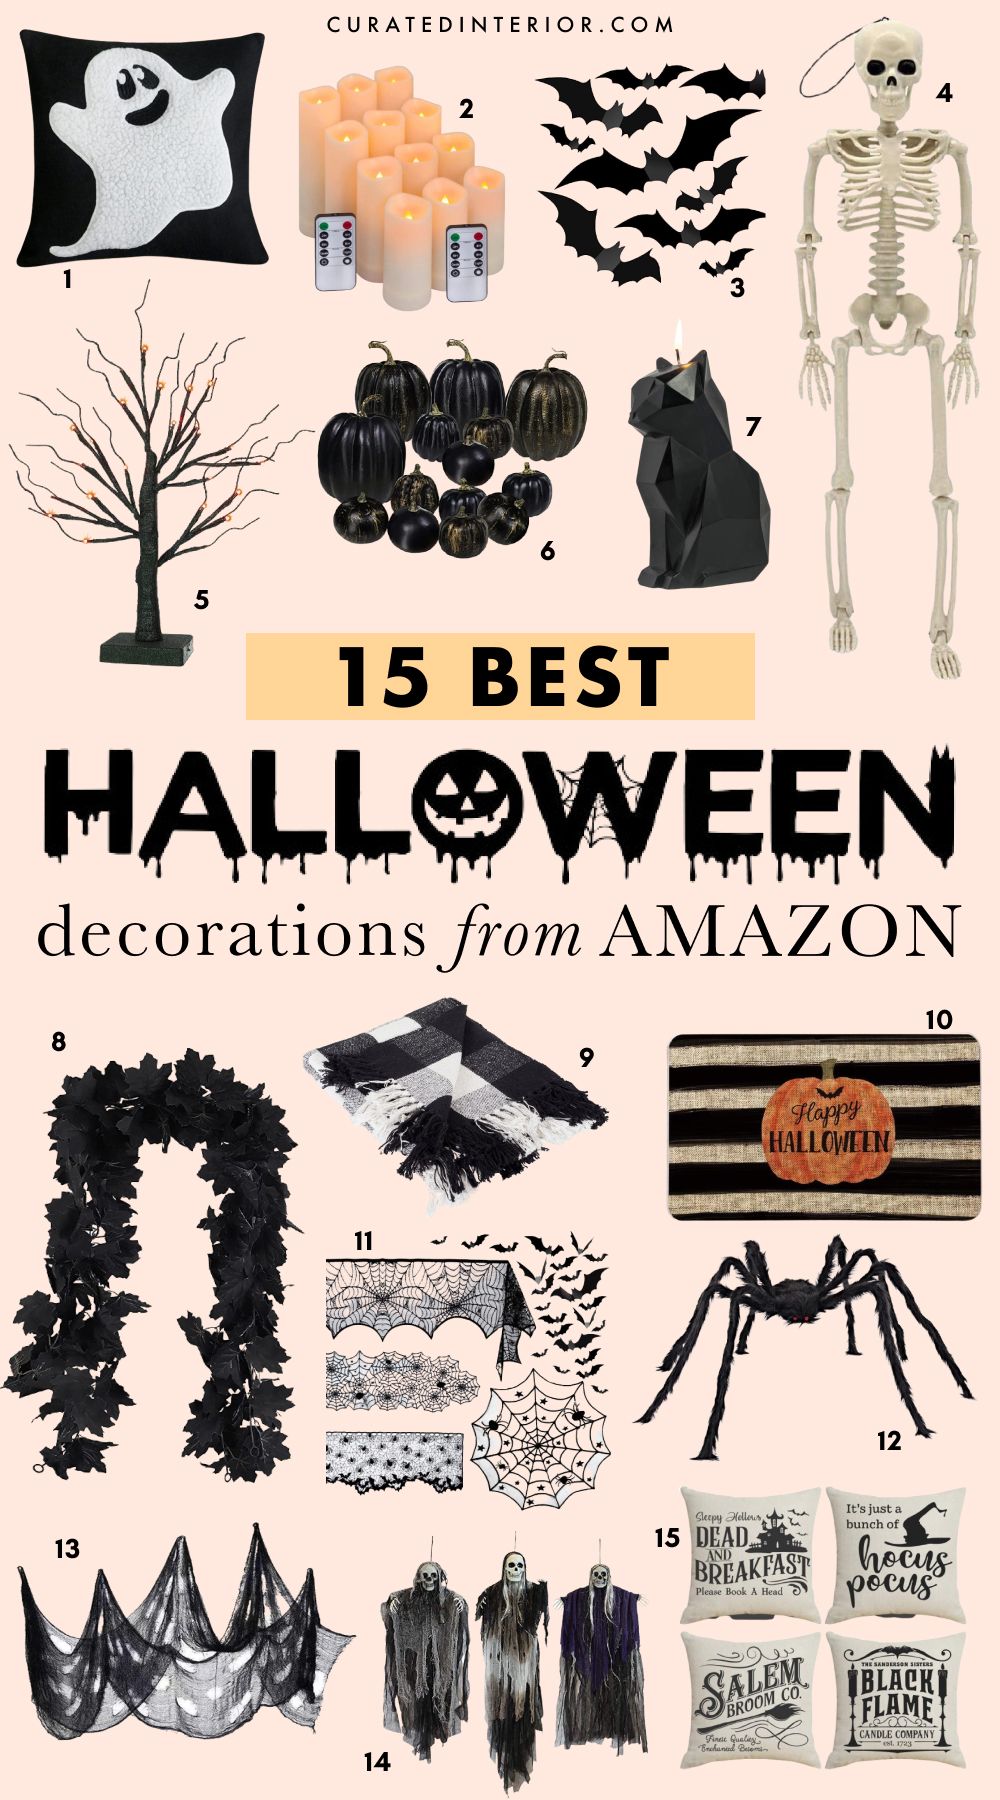 15 Best Halloween Decorations from Amazon